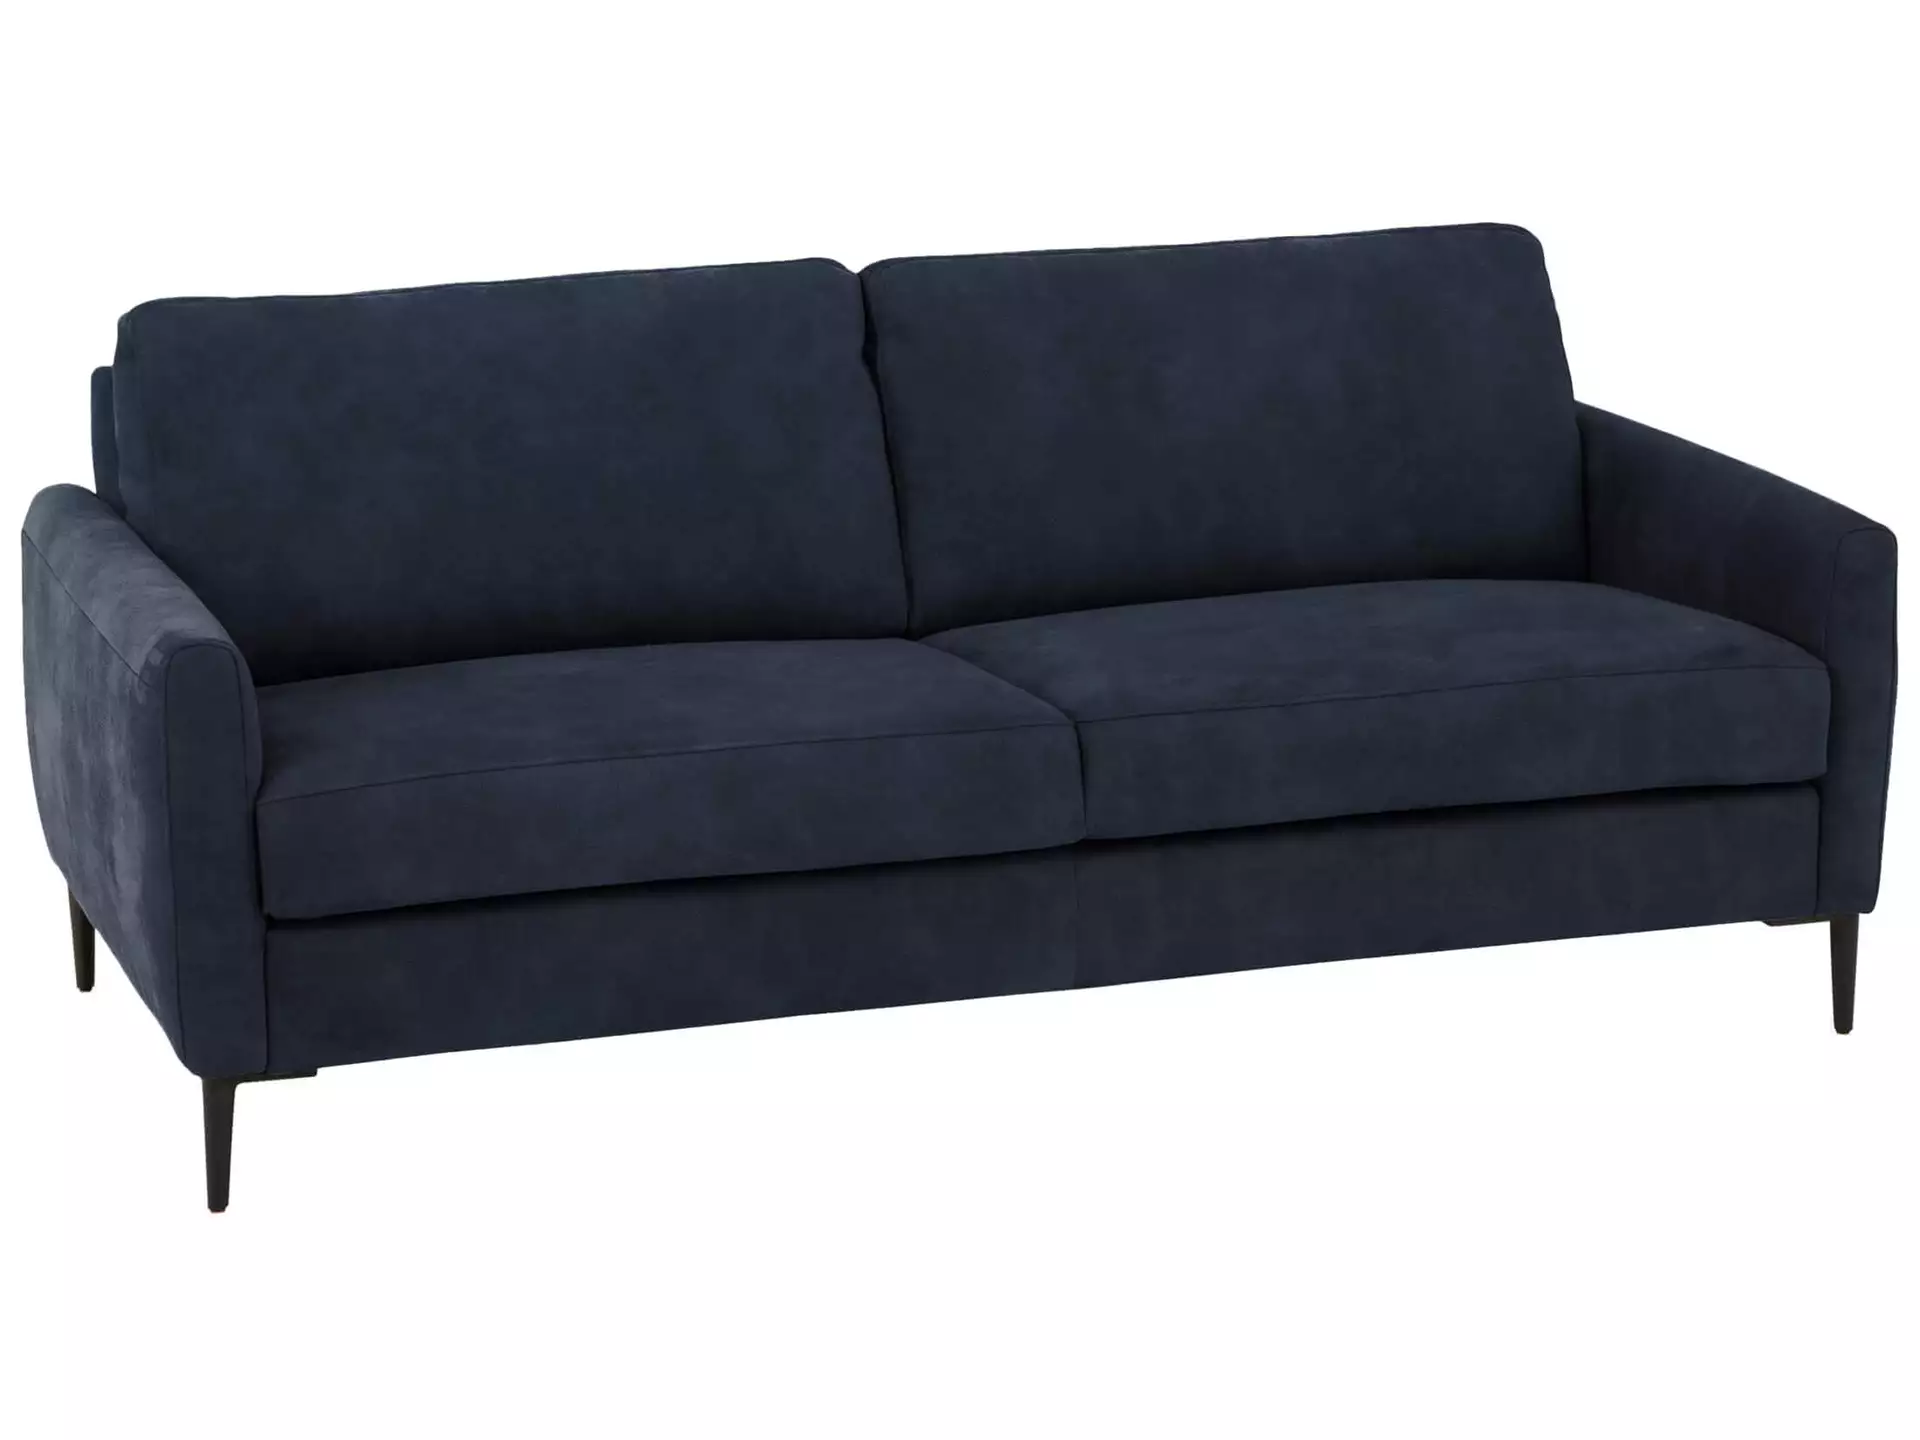 Sofa Antonio Basic B: 176 cm Schillig Willi / Farbe: Blau / Material: Leder Basic